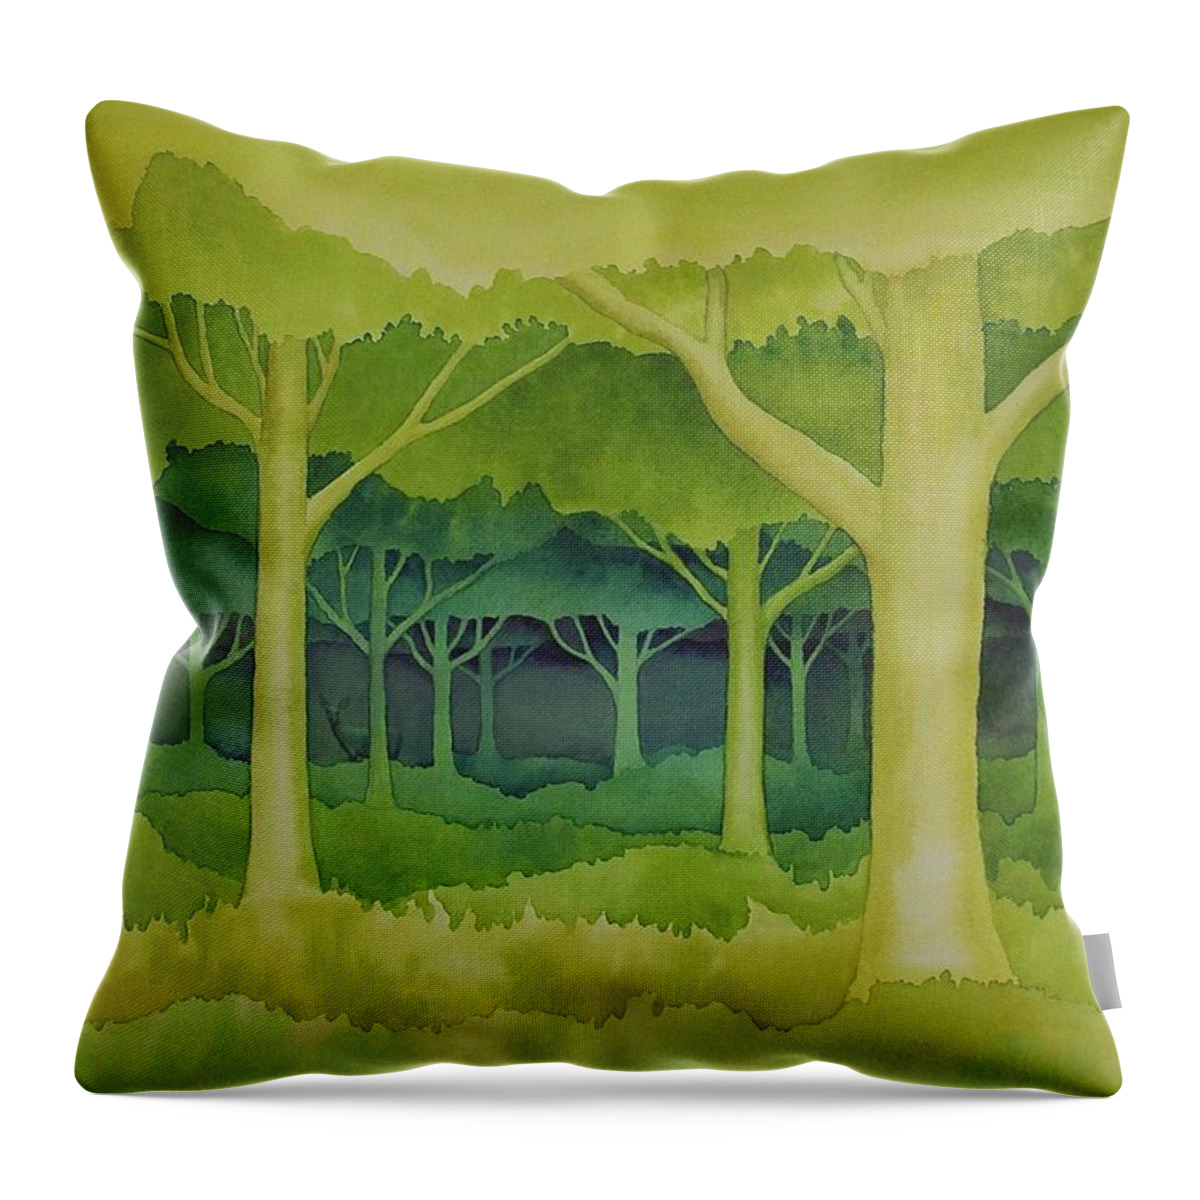 Kim Mcclinton Throw Pillow featuring the painting The Forest for the Trees by Kim McClinton